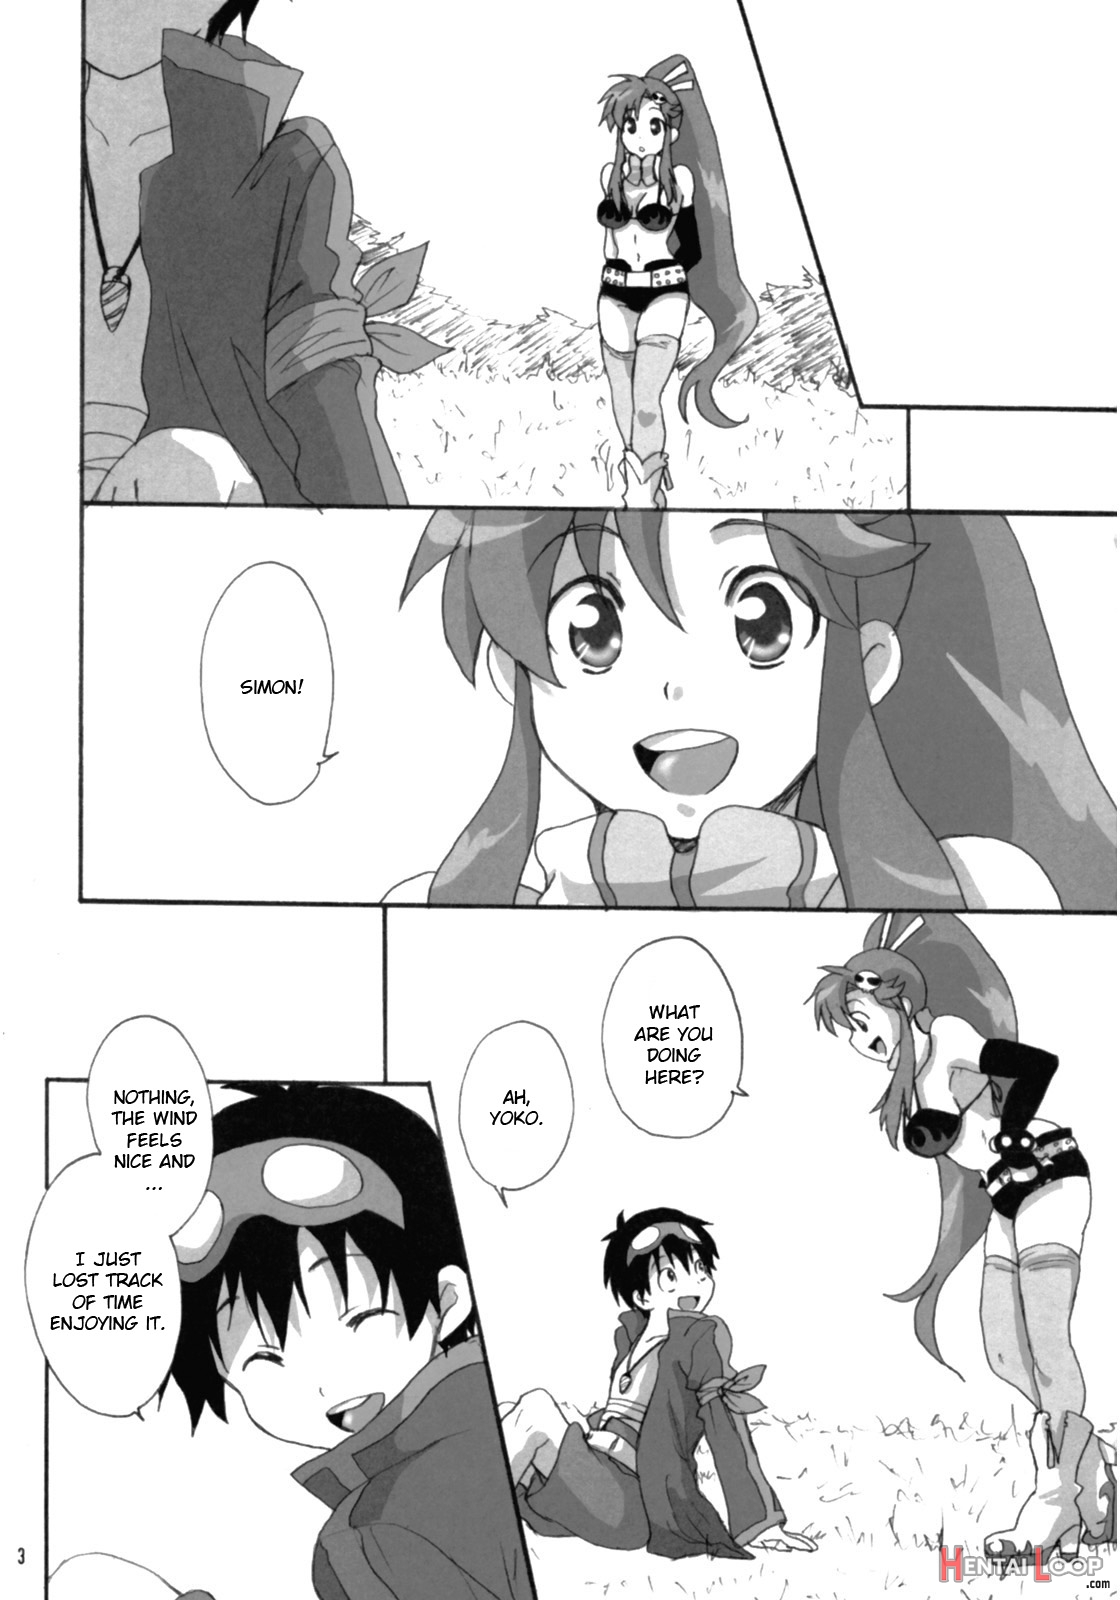 Yoko And Simon's Feelings page 2